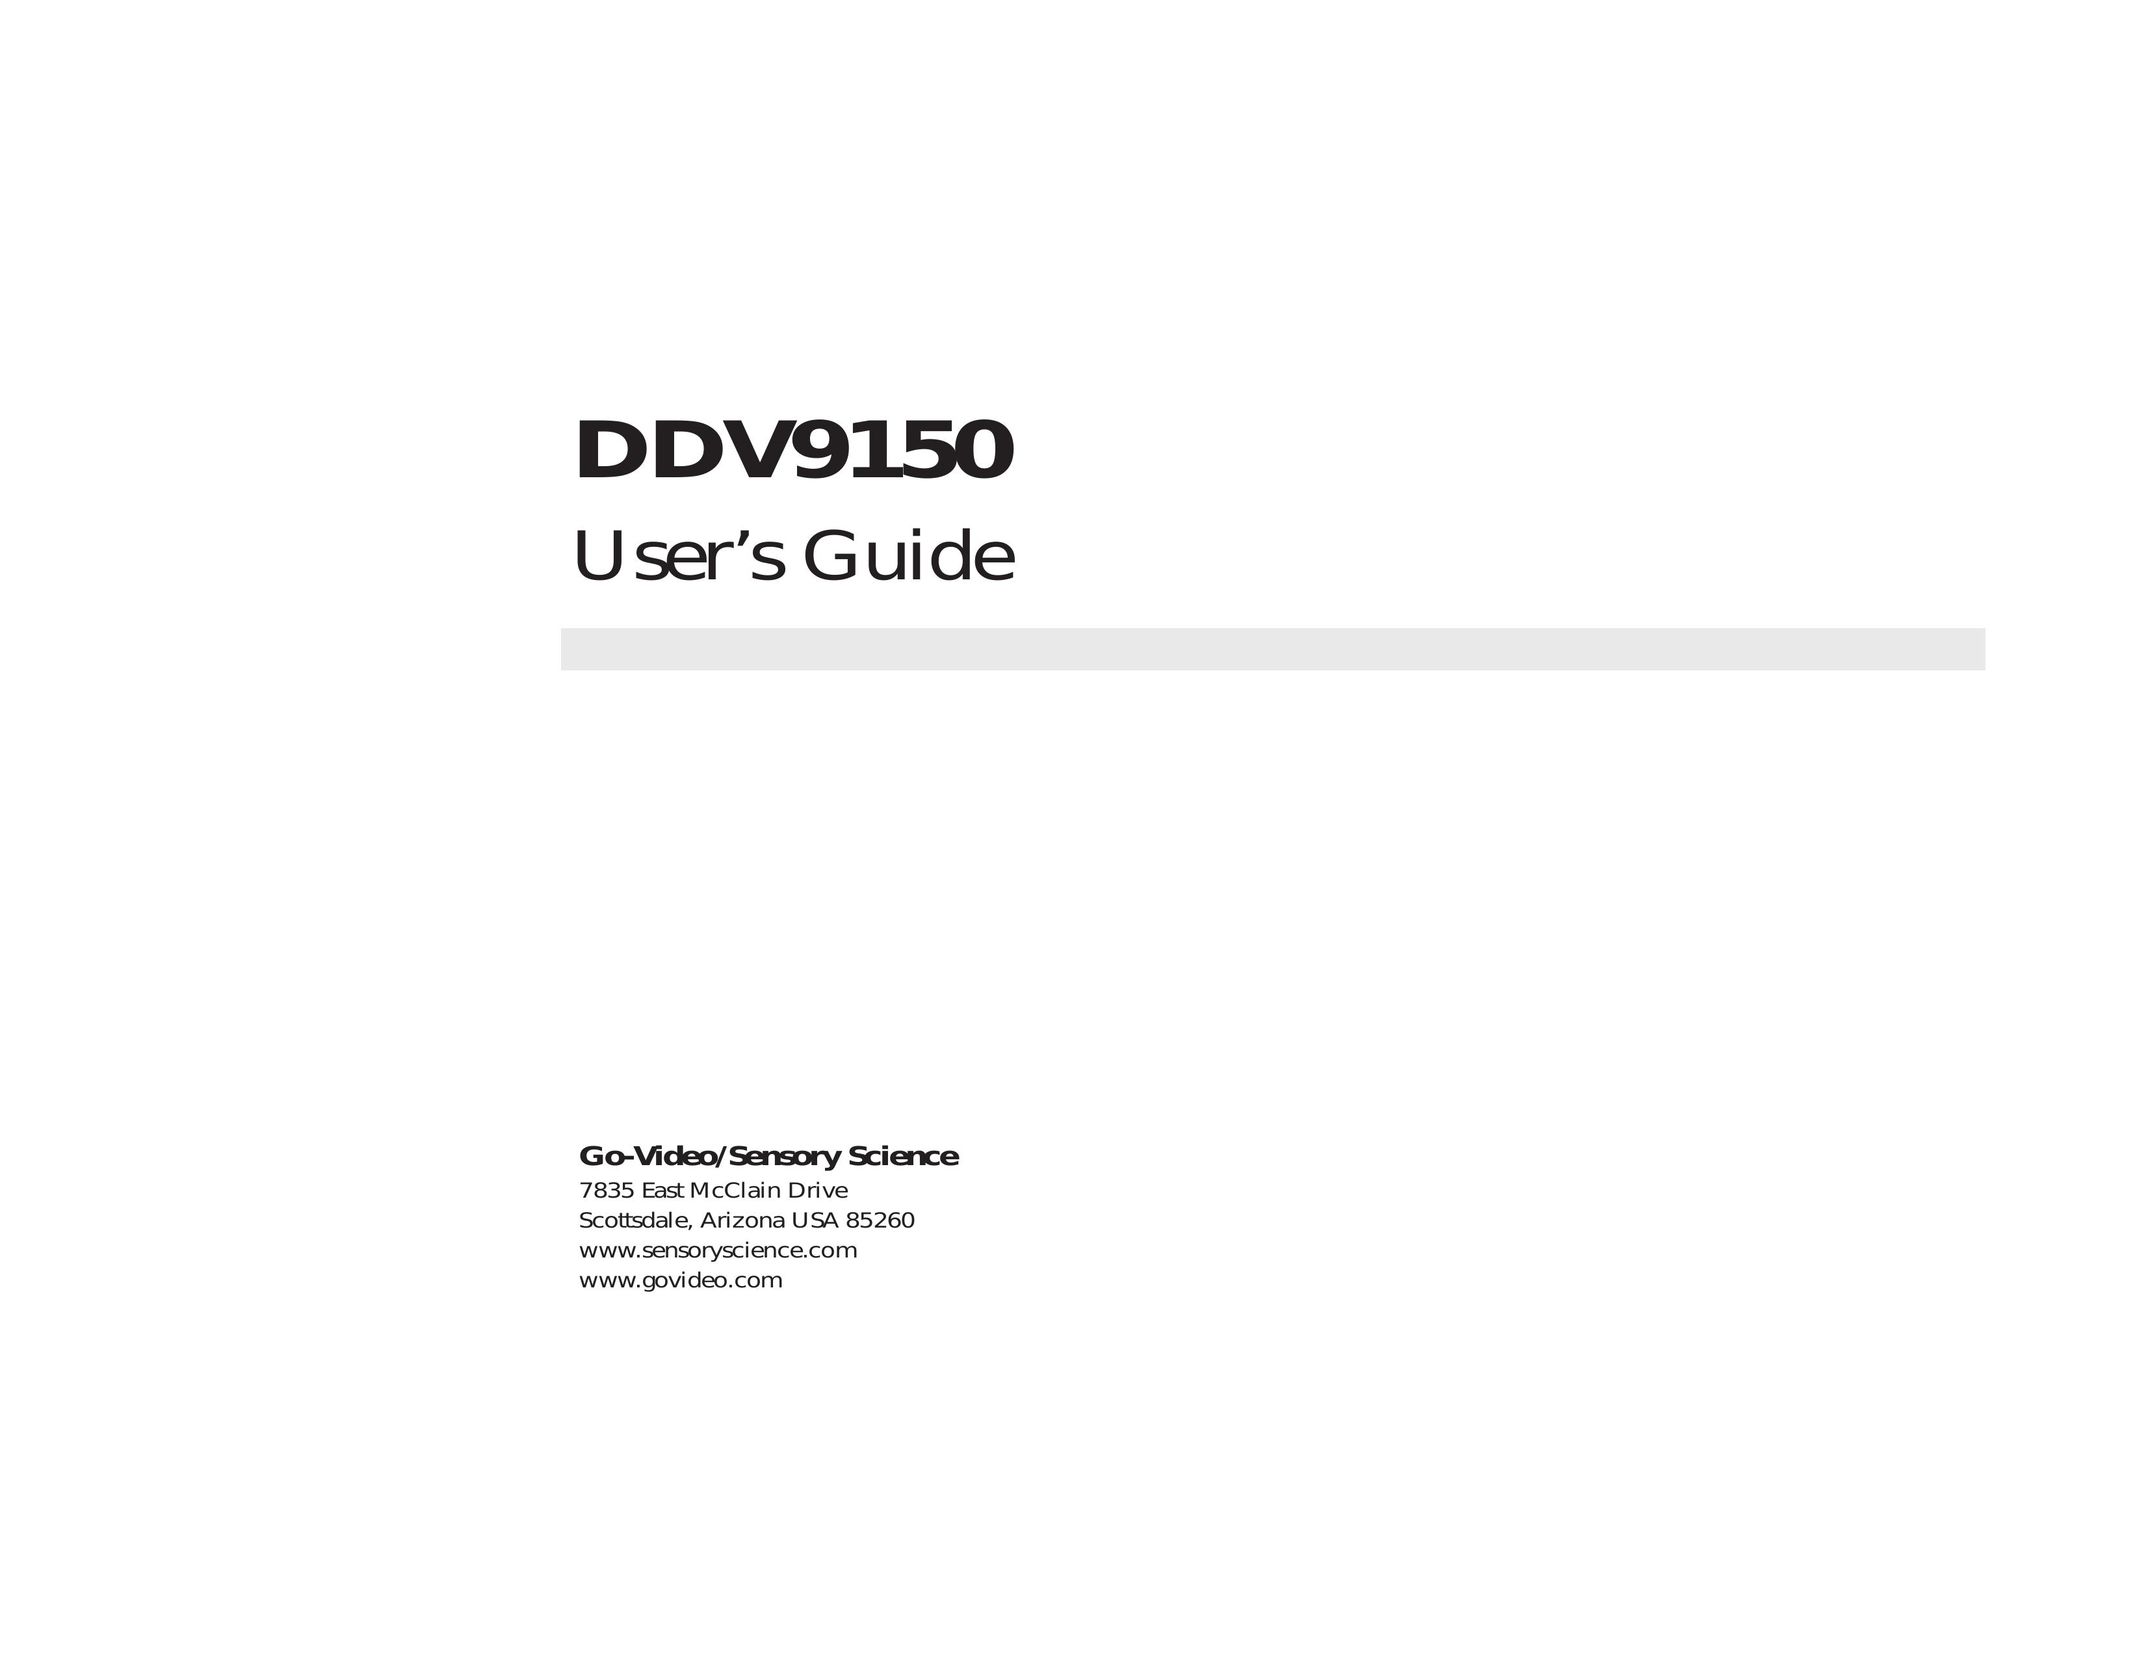 Sensory Science DDV9150 DVD Player User Manual